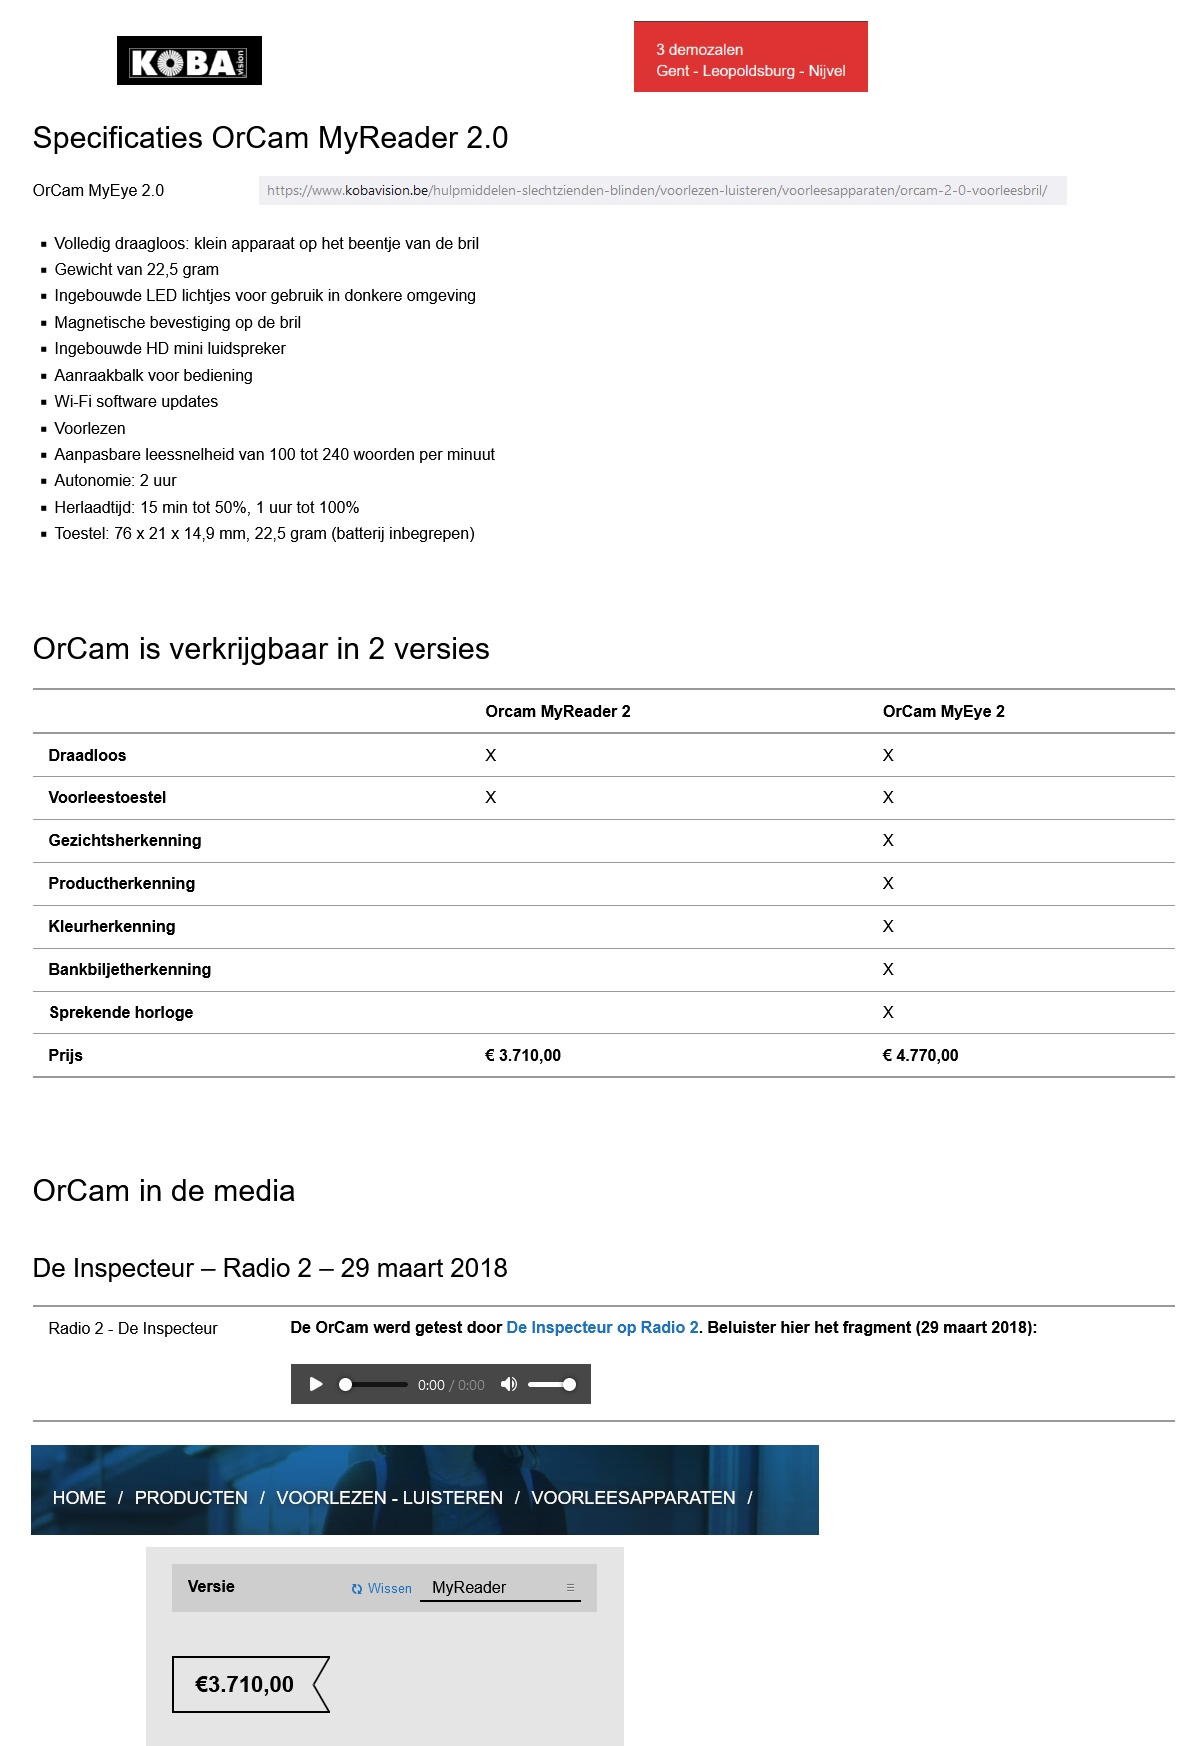 toegevoegd document 3 van Orcam Myreader  